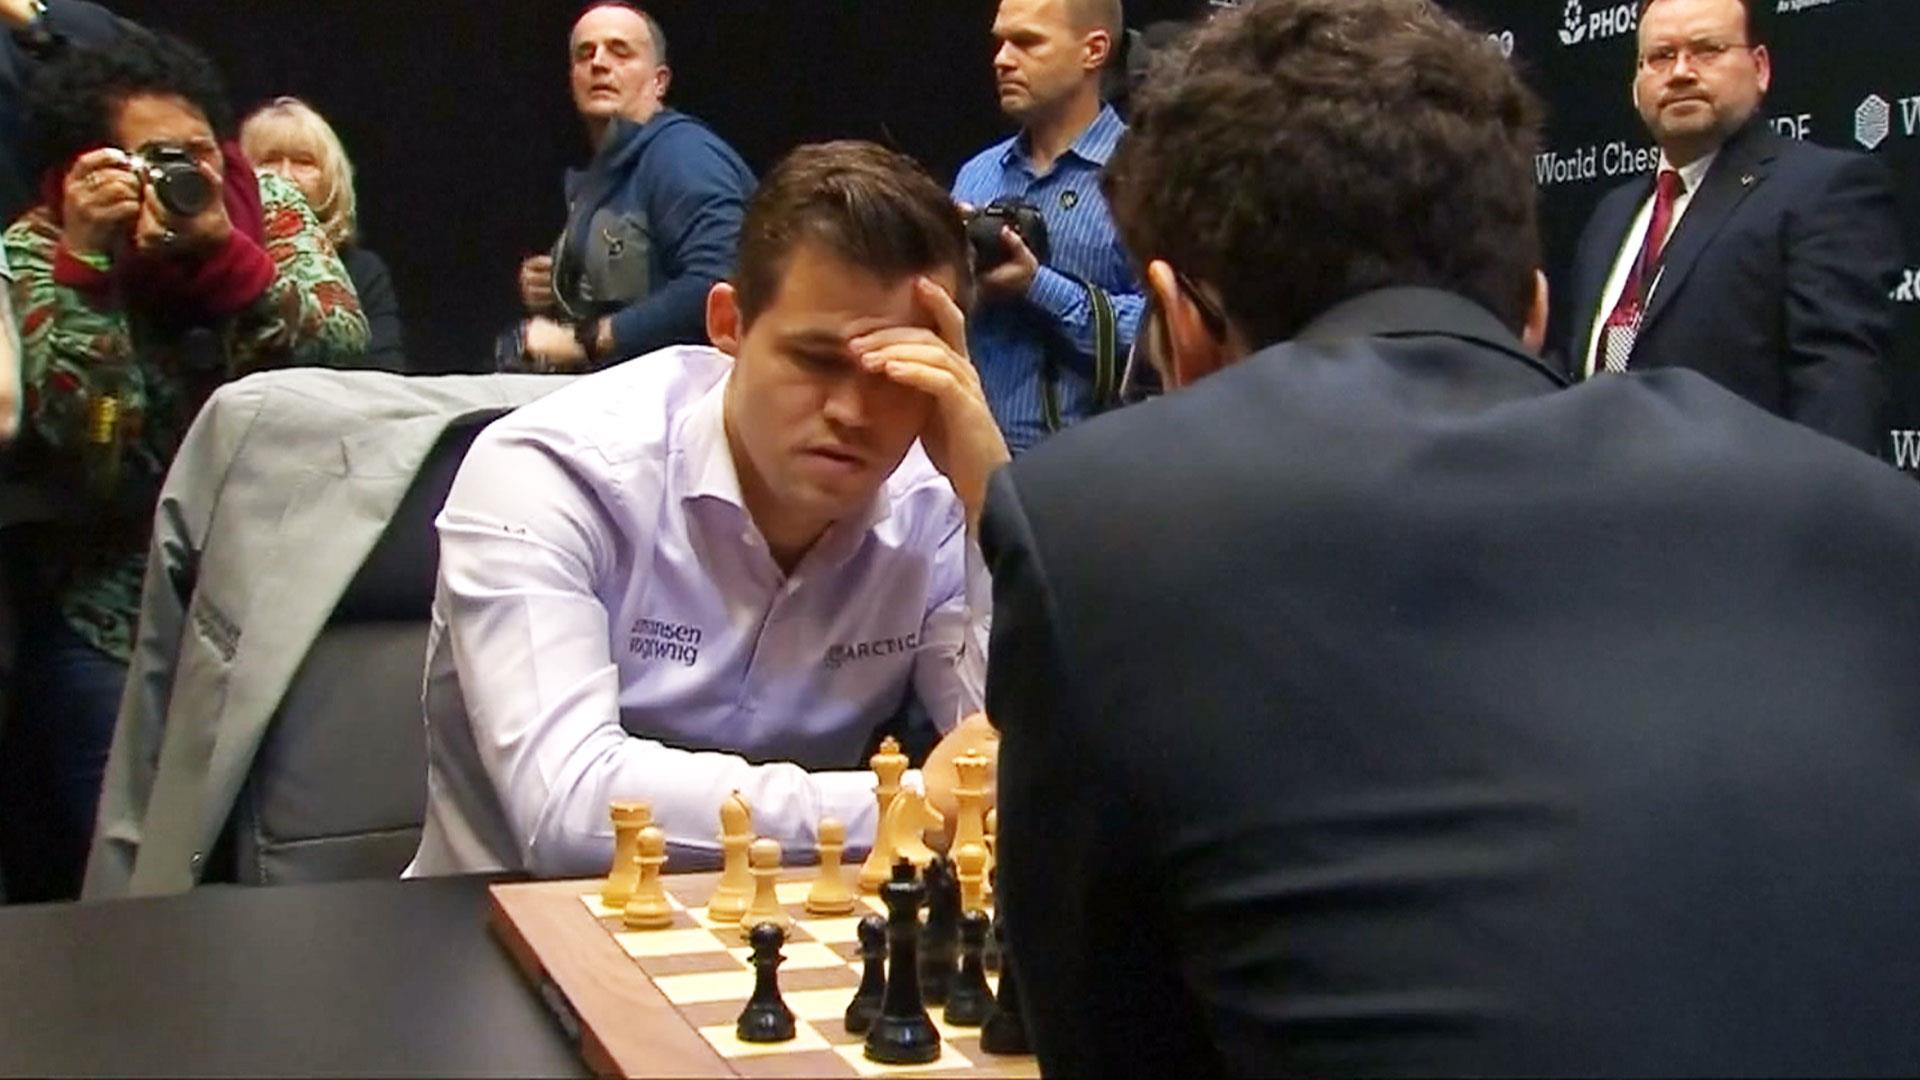 Magnus Carlsen defeats Fabiano Caruana to retain World Chess